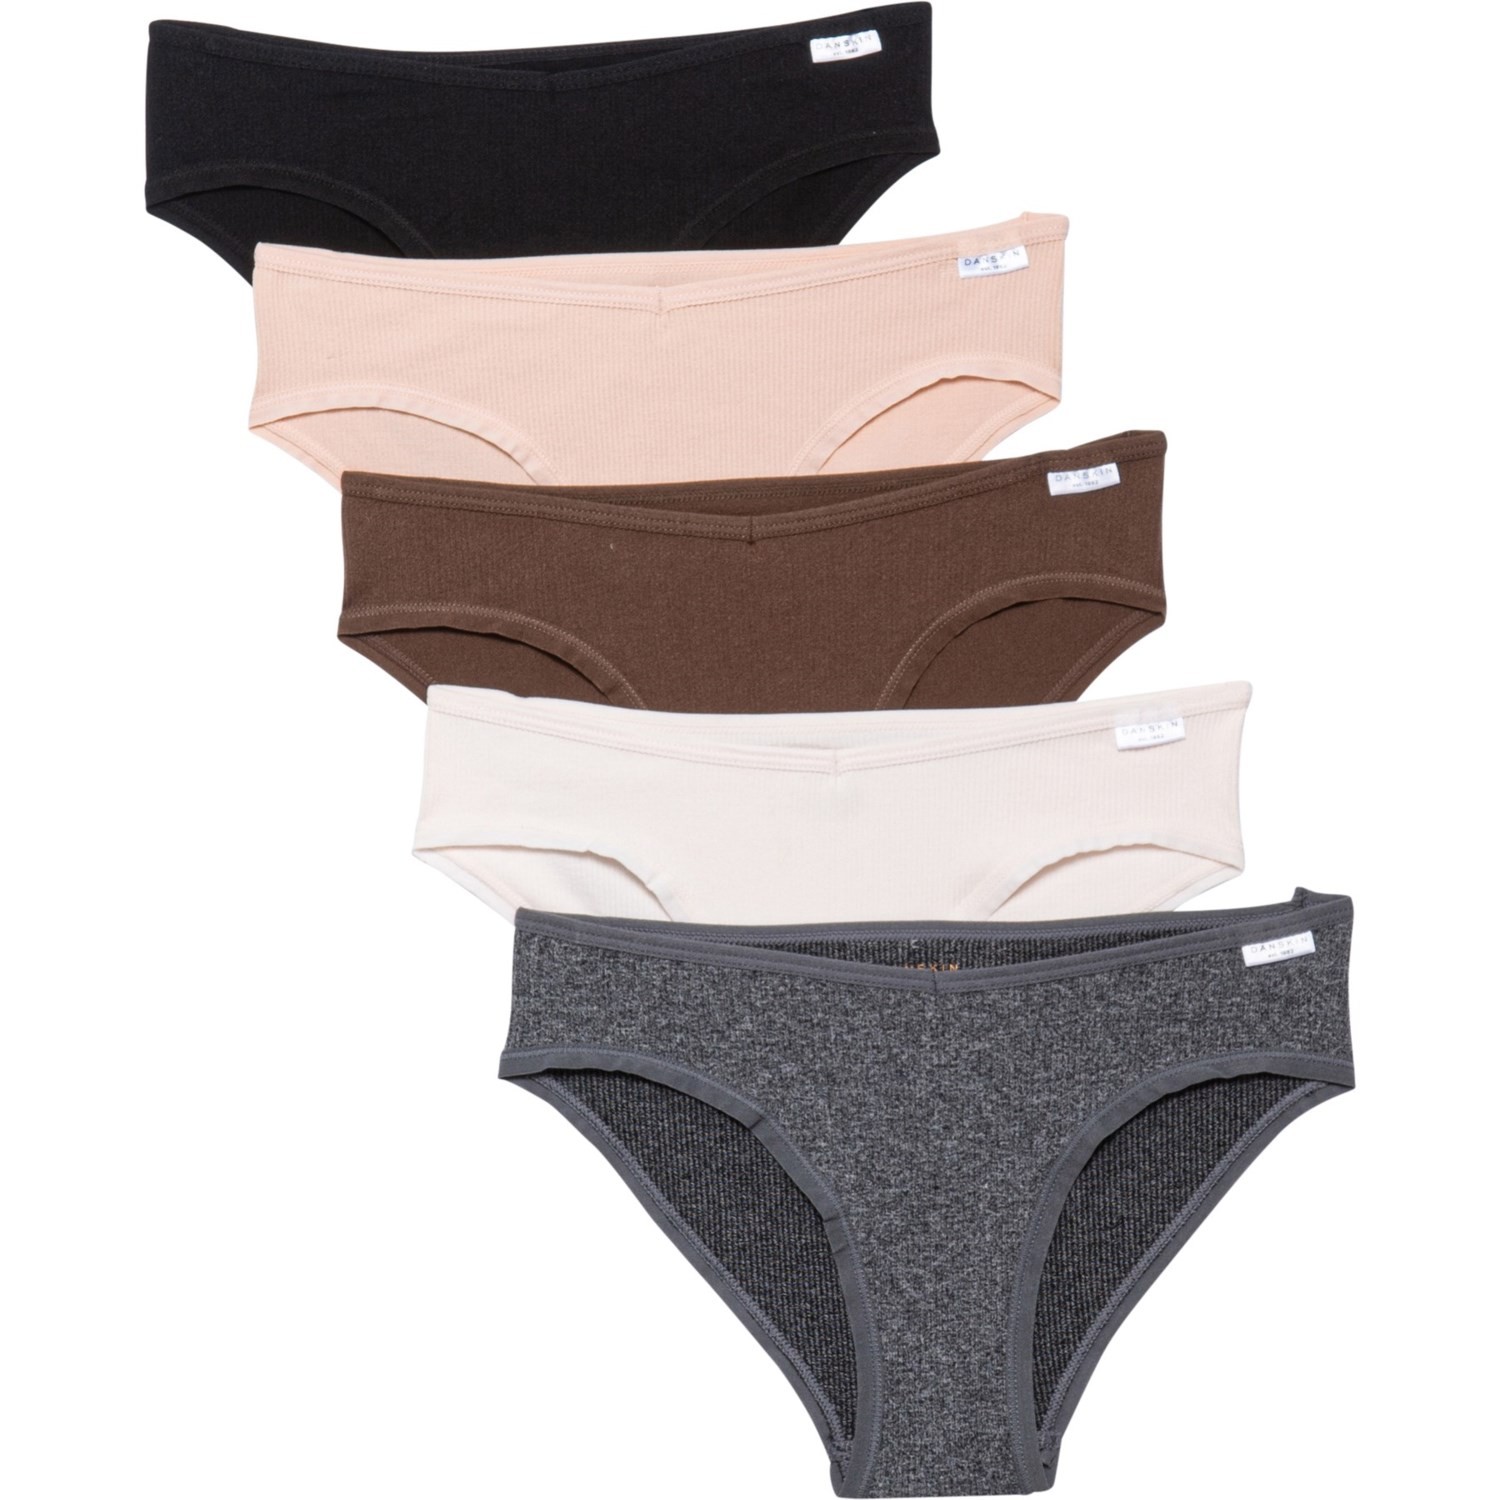 Mejores ofertas e historial de precios de Danskin Seamless Ribbed Panties -  5-Pack, Bikini Brief en